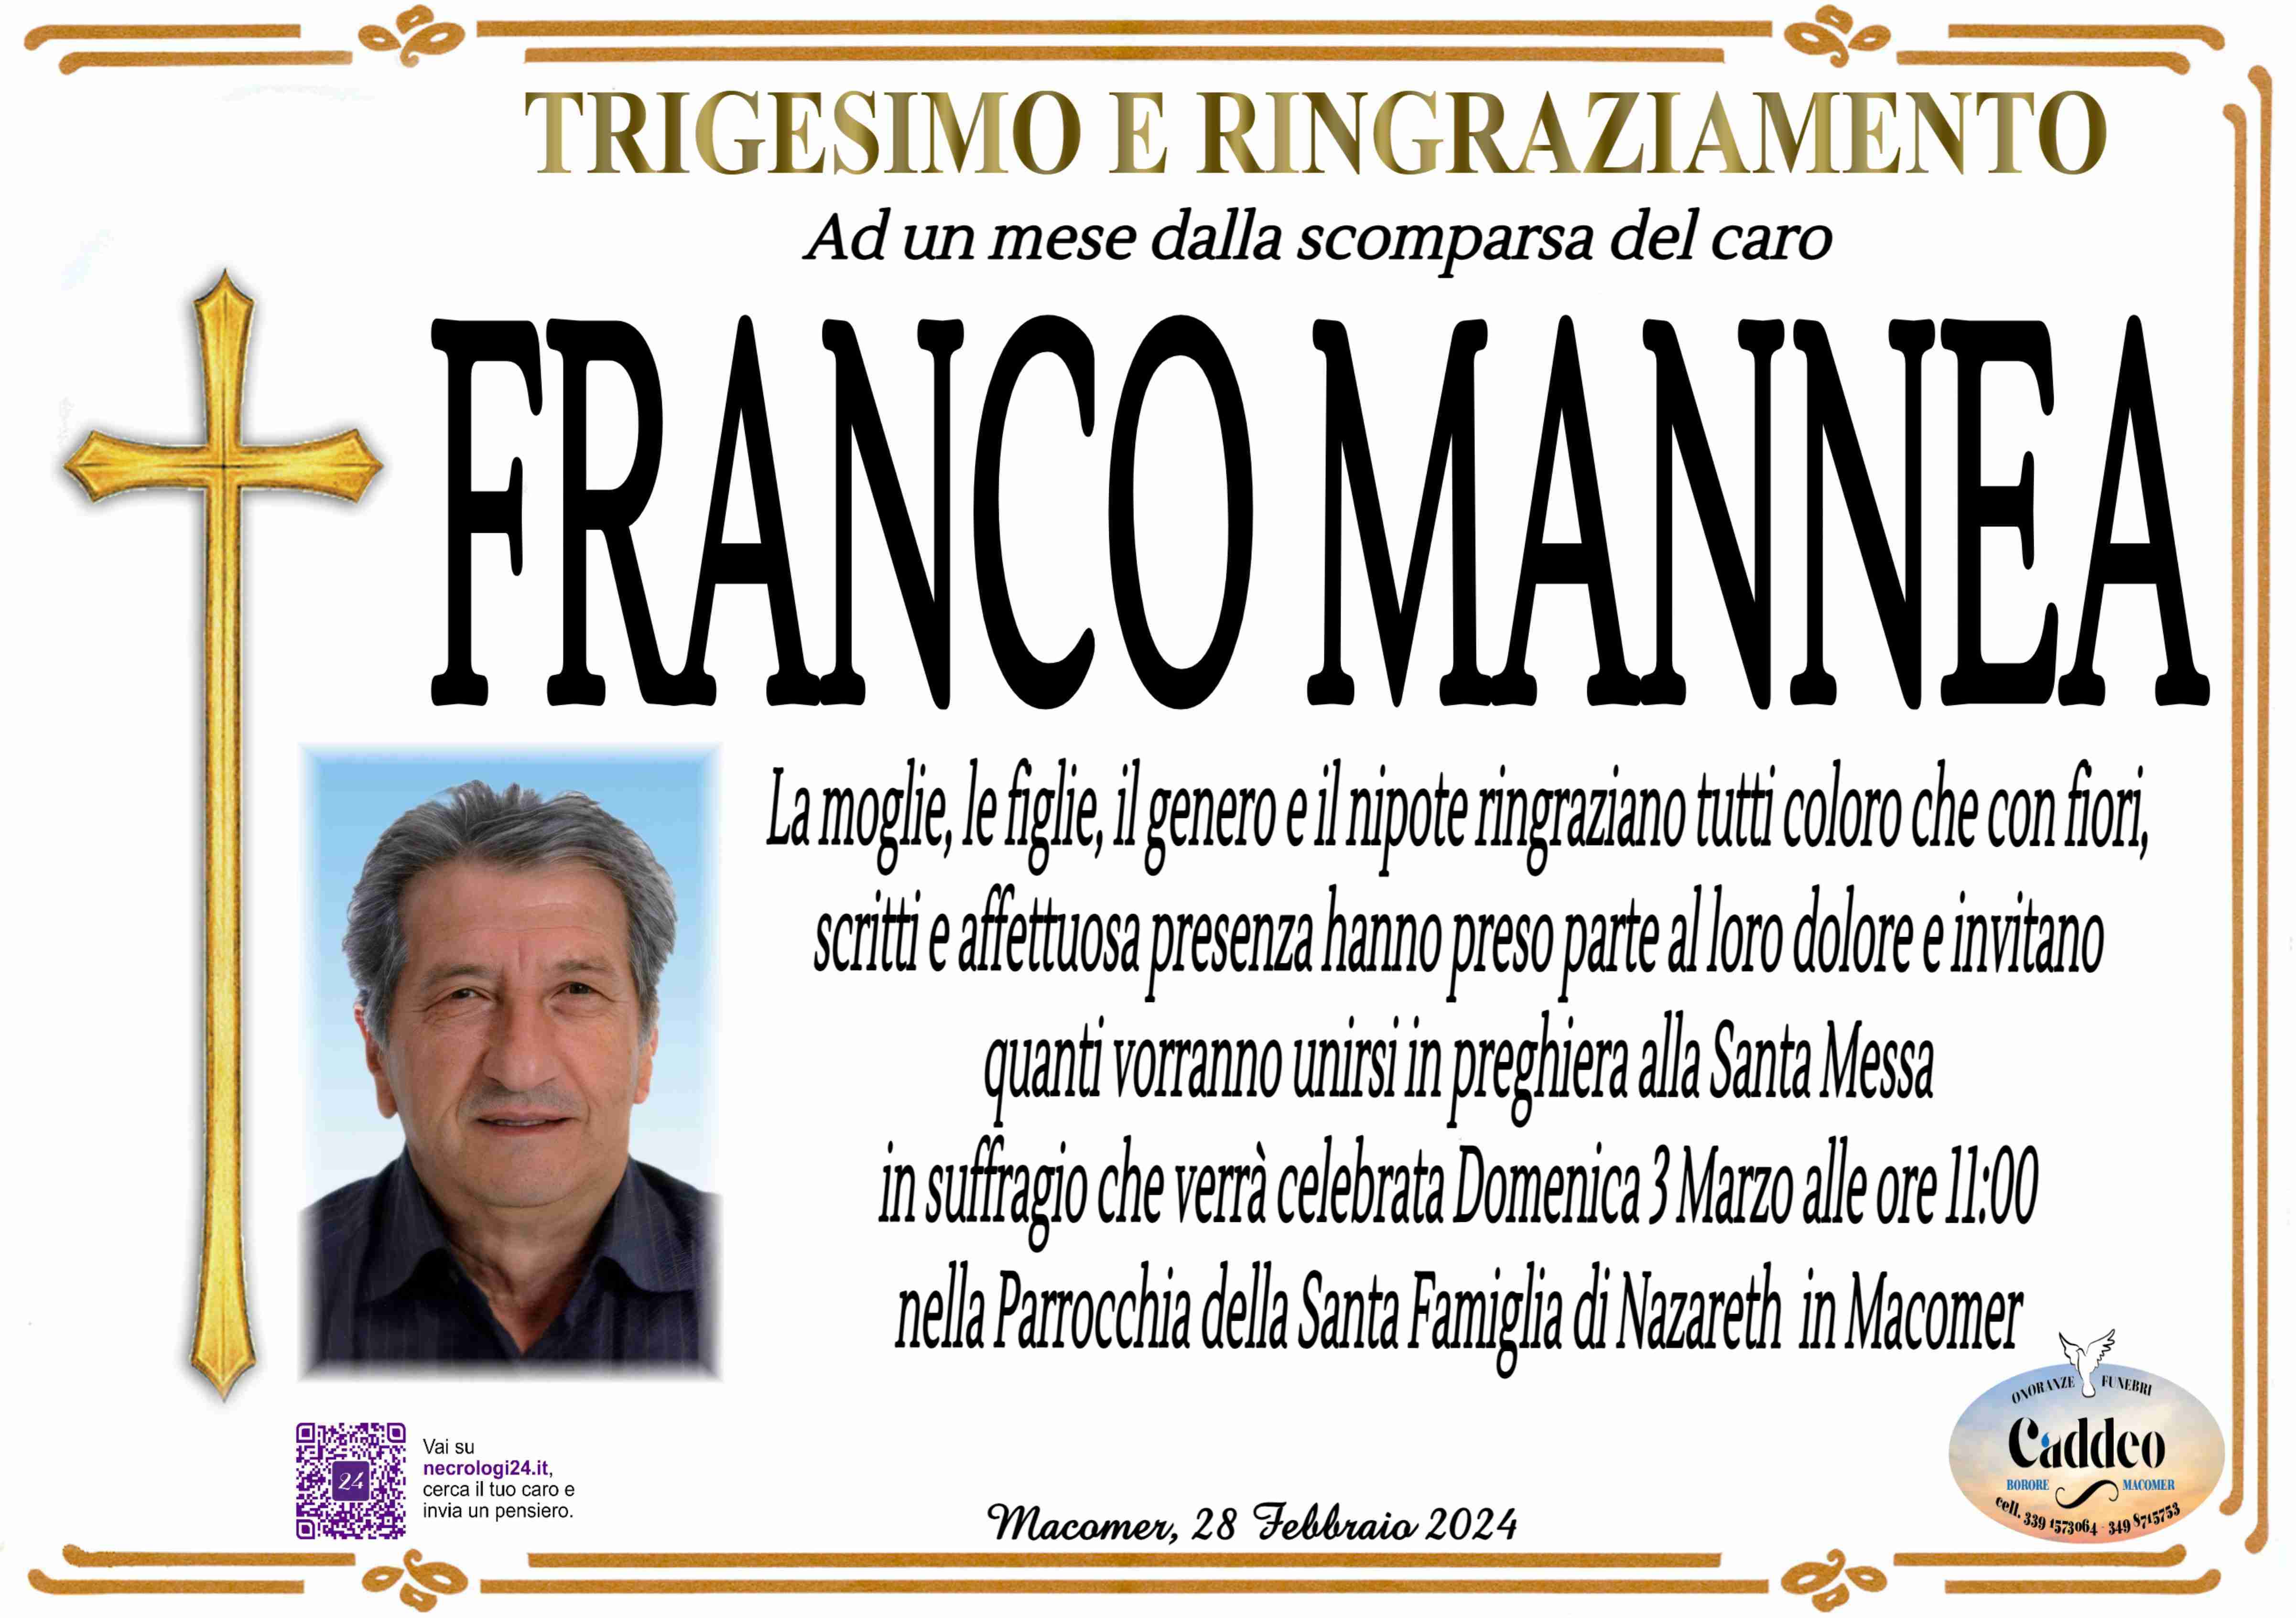 Francesco Mannea